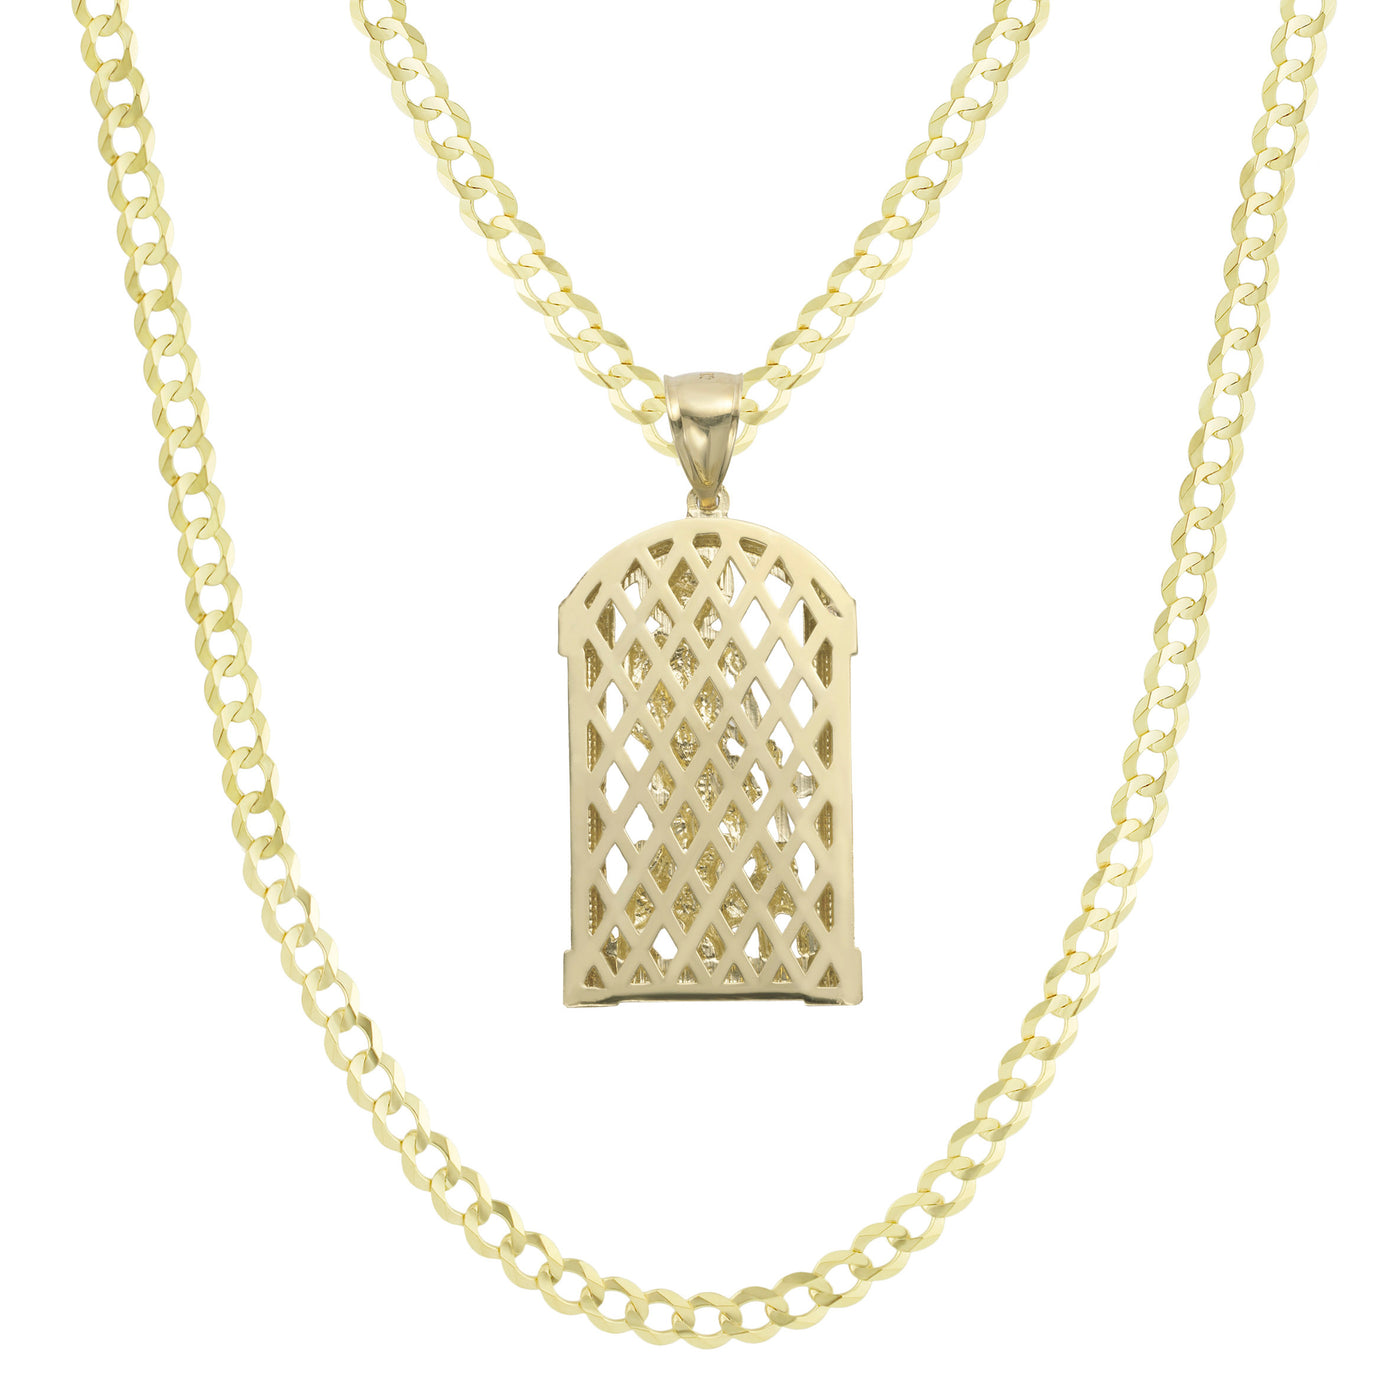 2" St. Barbara Pendant & Chain Necklace Set 10K Yellow Gold